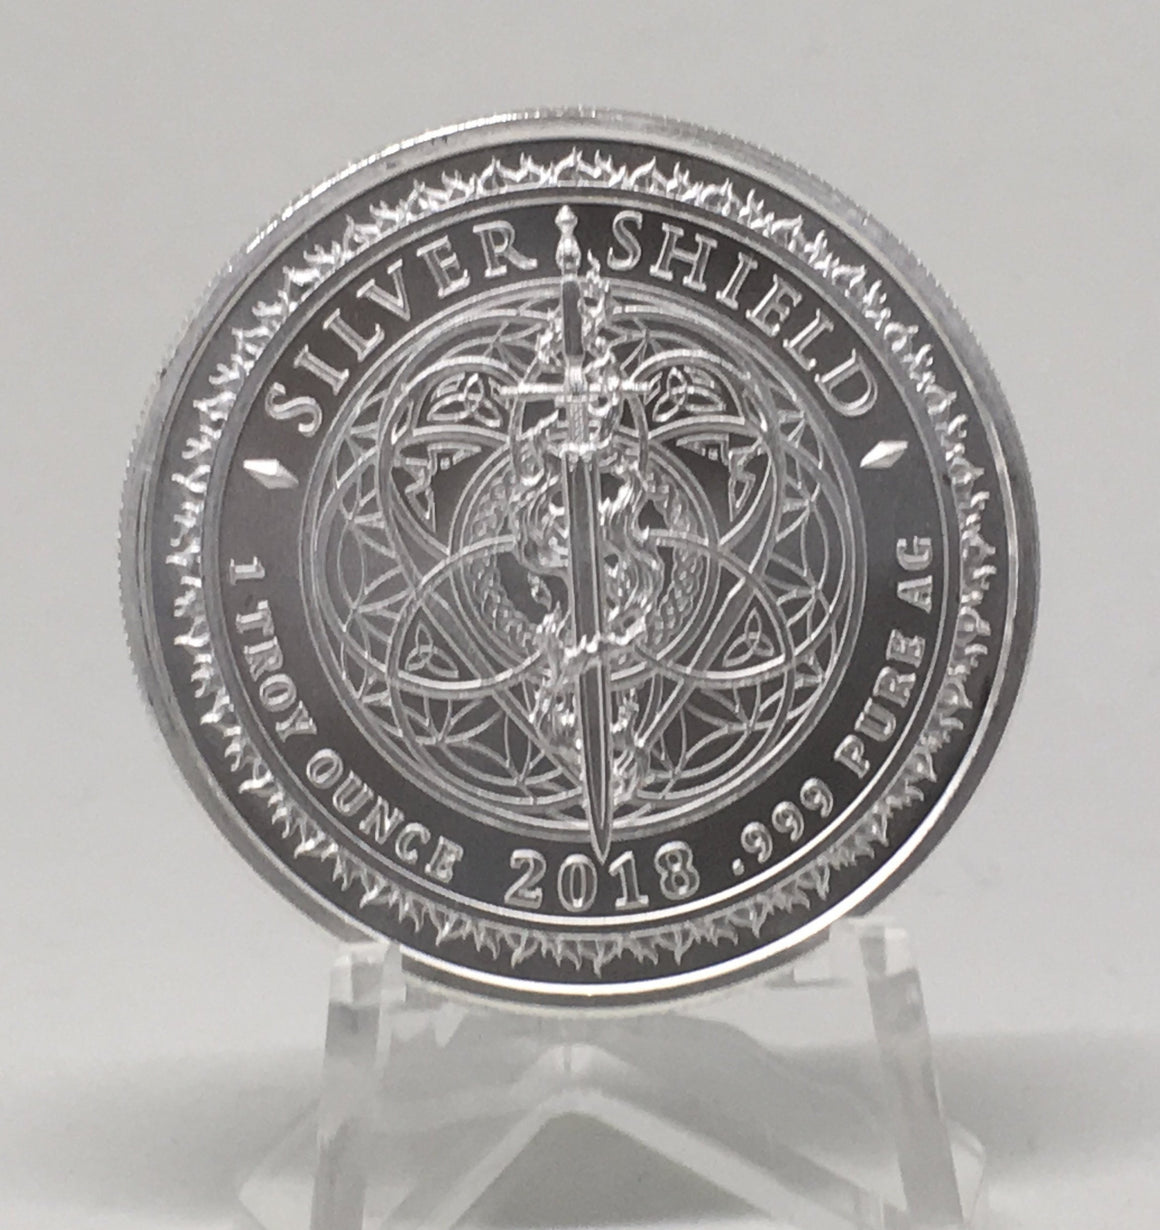 2018 Liberty Bell by Silver Shield, Mini Mintage - BU 1 oz .999 Silver Round